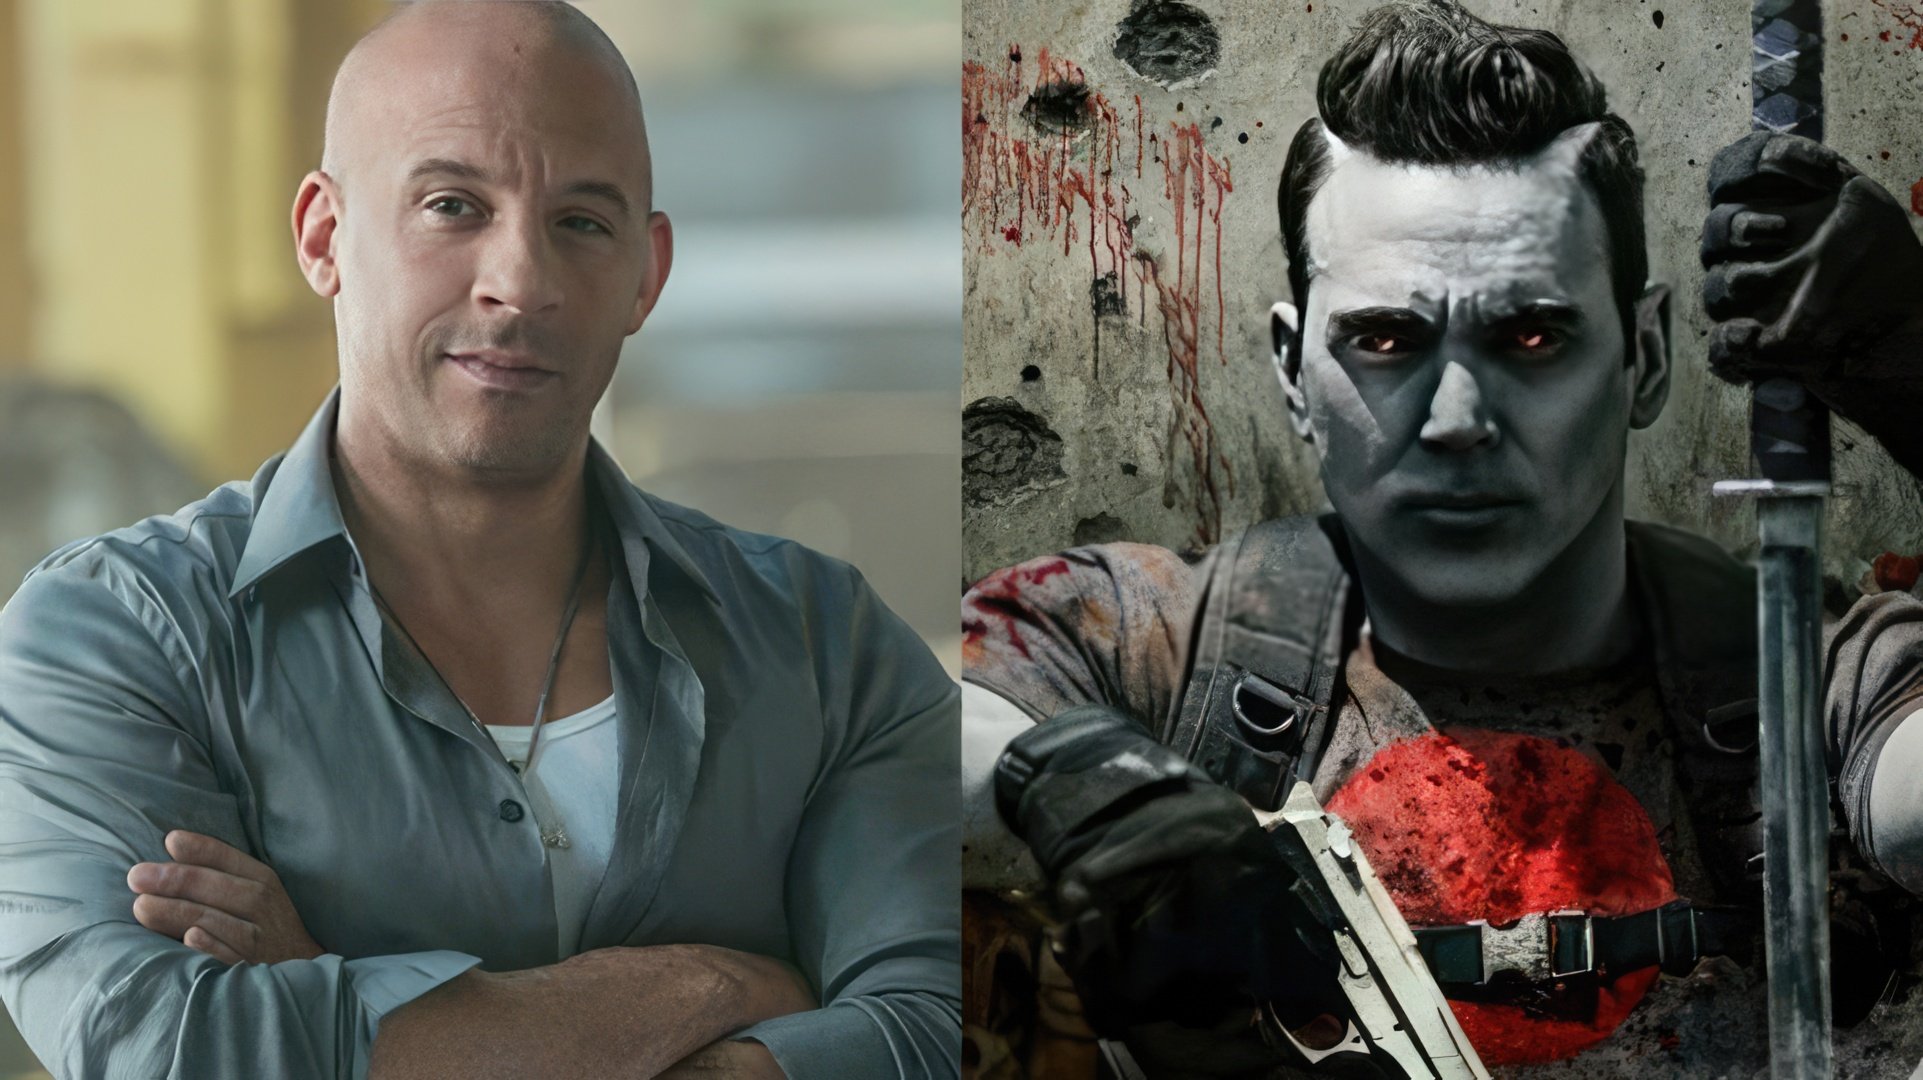 Vin Diesel got the role of Bloodshot